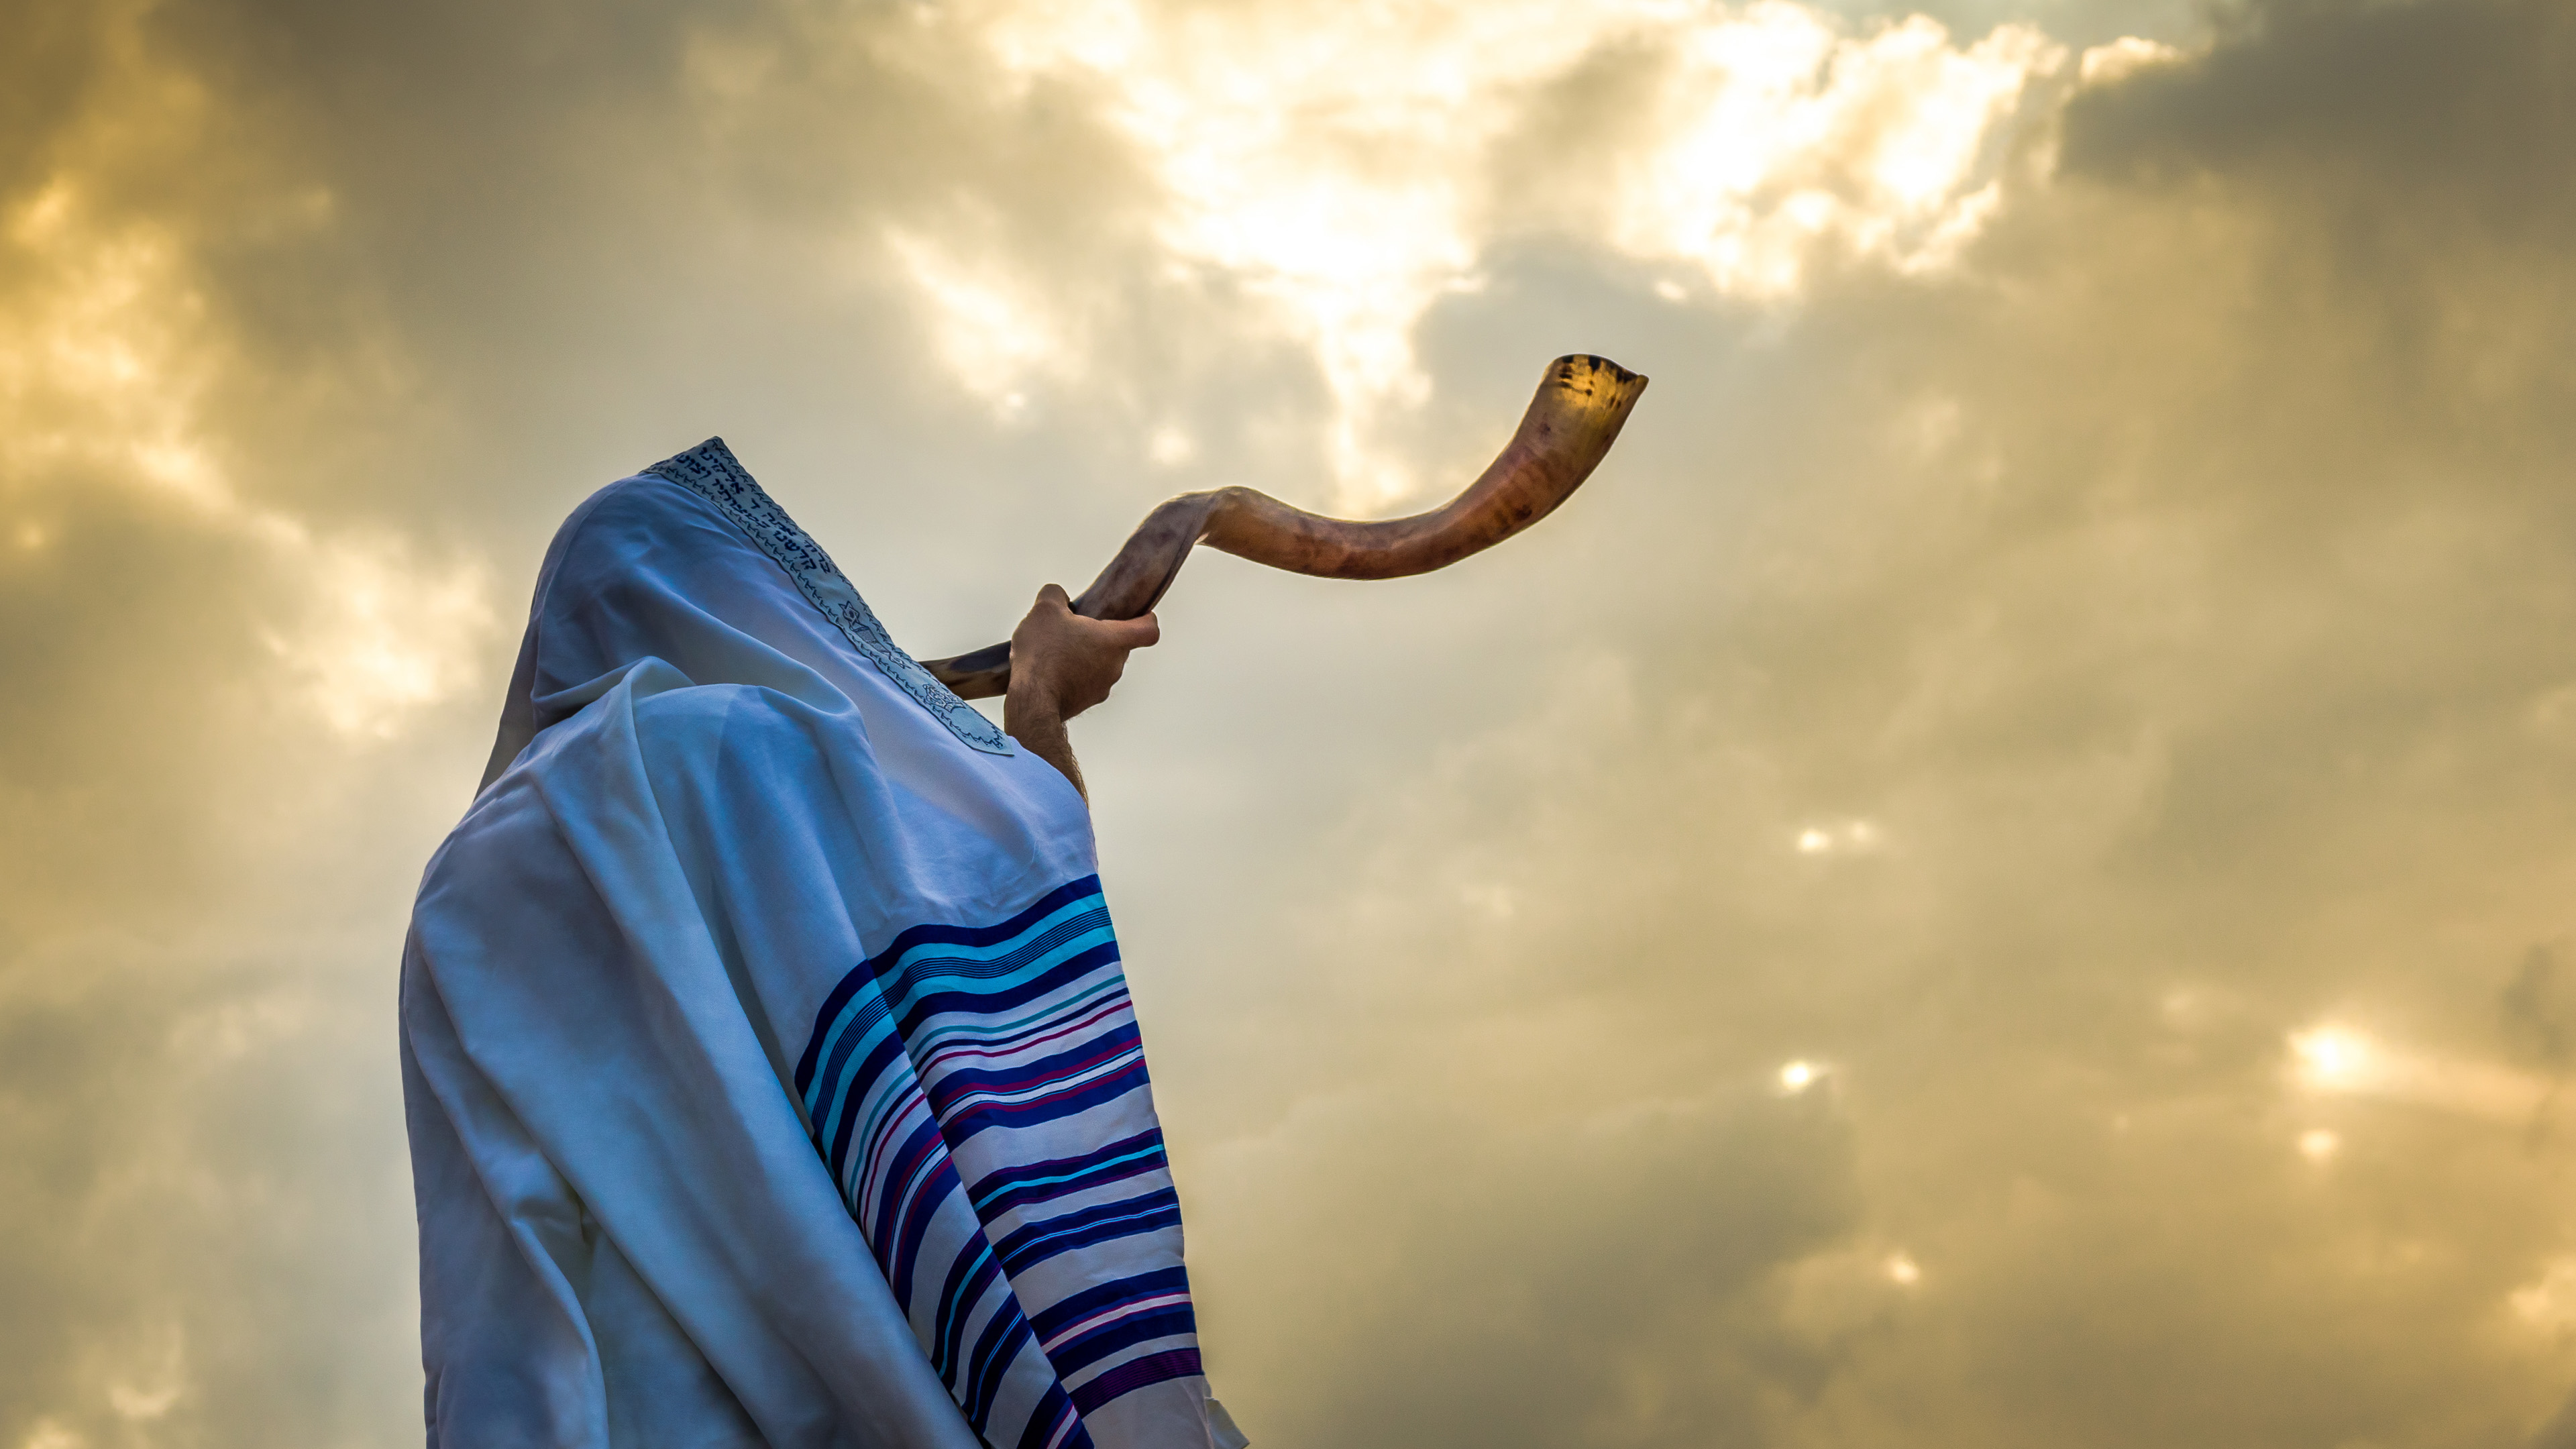 Jewish person in a tallit prayer shawl against dramatic sky